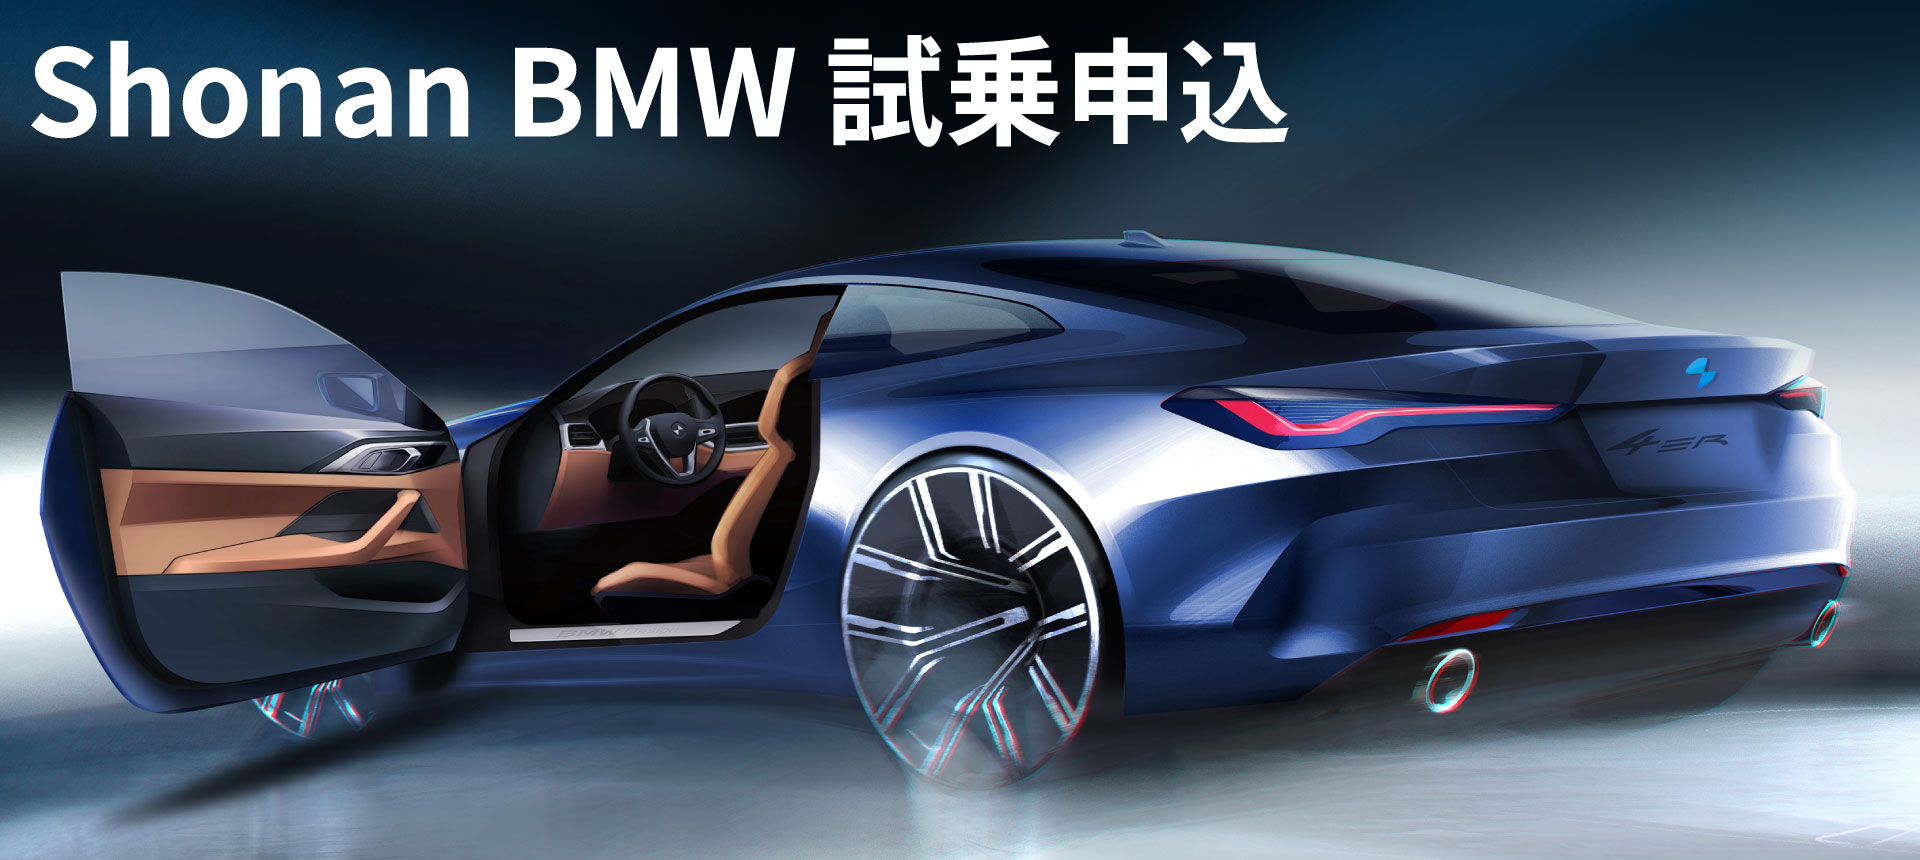 Shonan BMW車選びのご相談申込